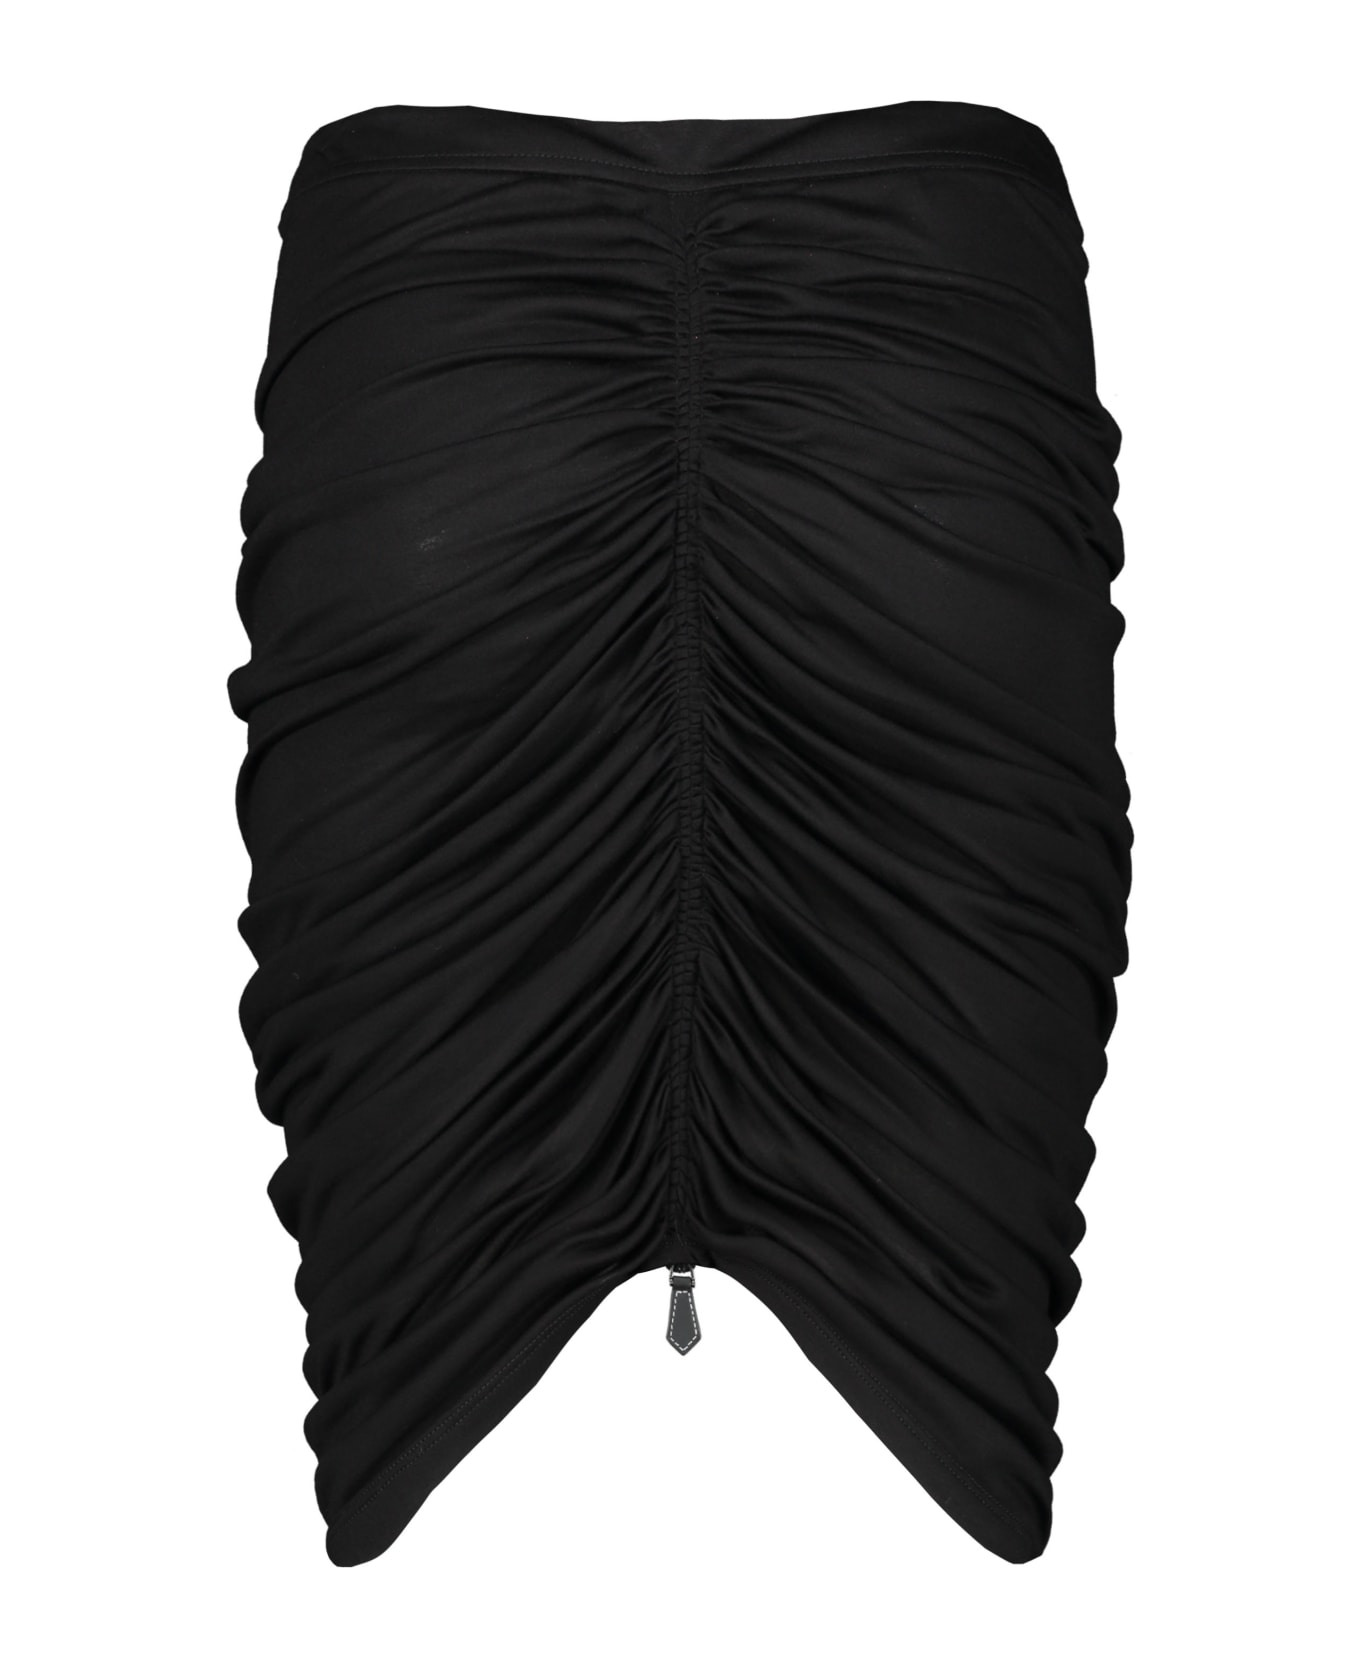 Burberry Front Zip Detail Pencil Skirt - black